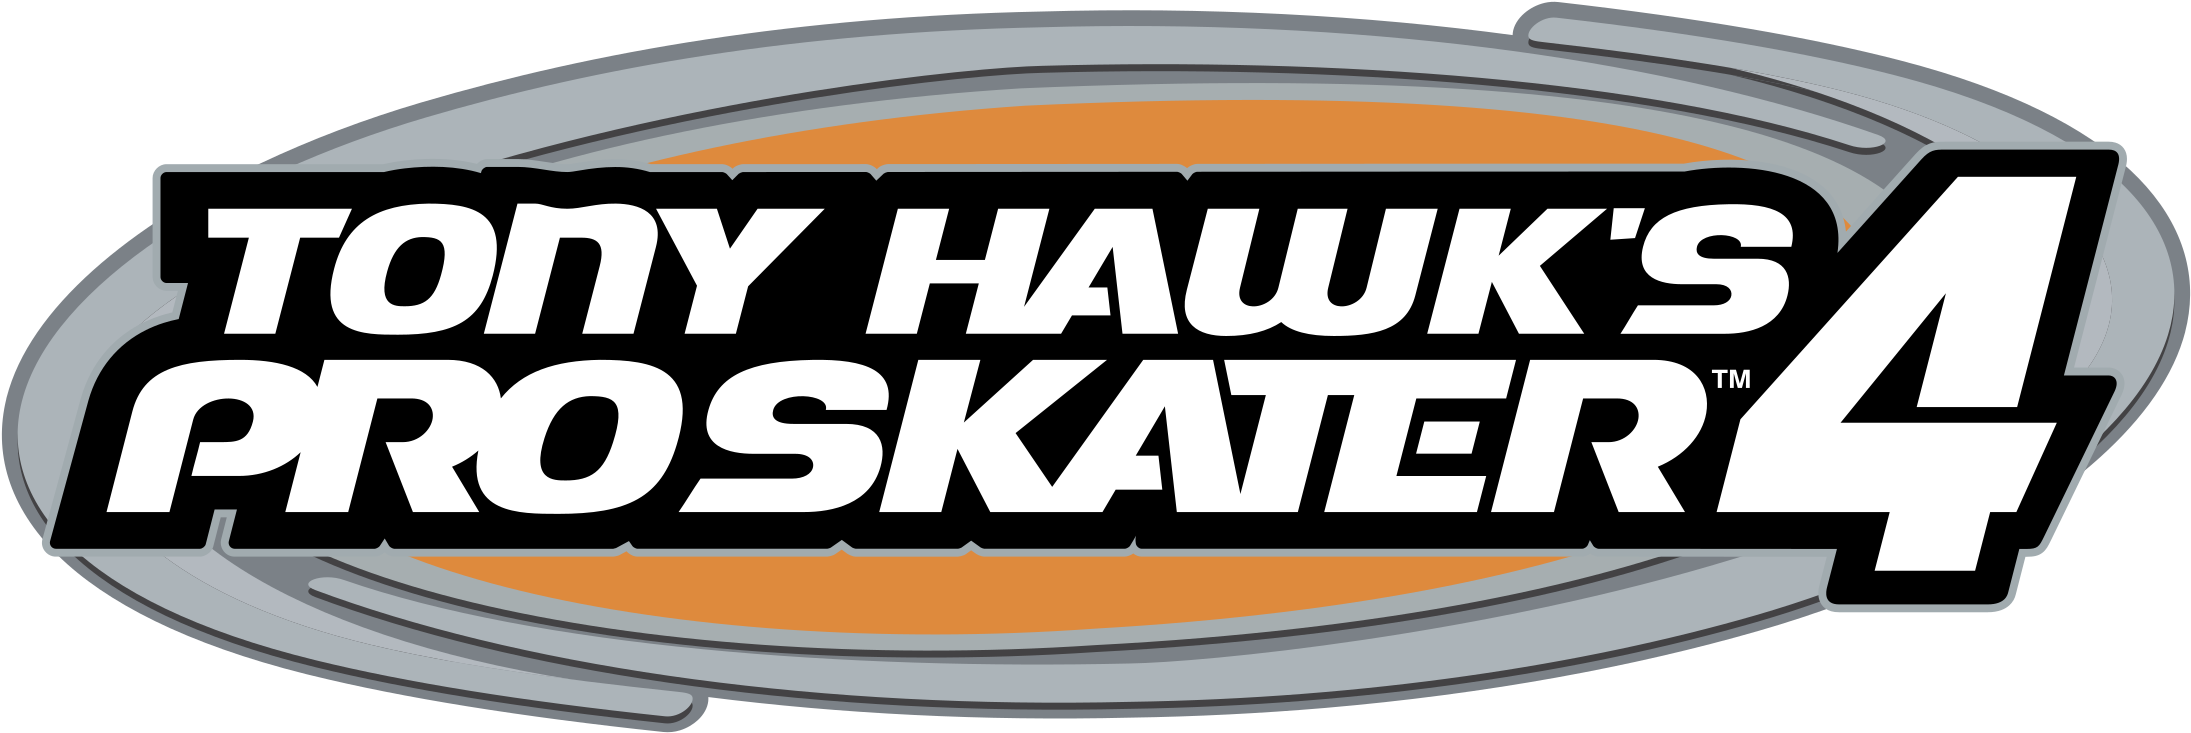 Tony Hawk’s Pro Skater 4 Logo Free PNG